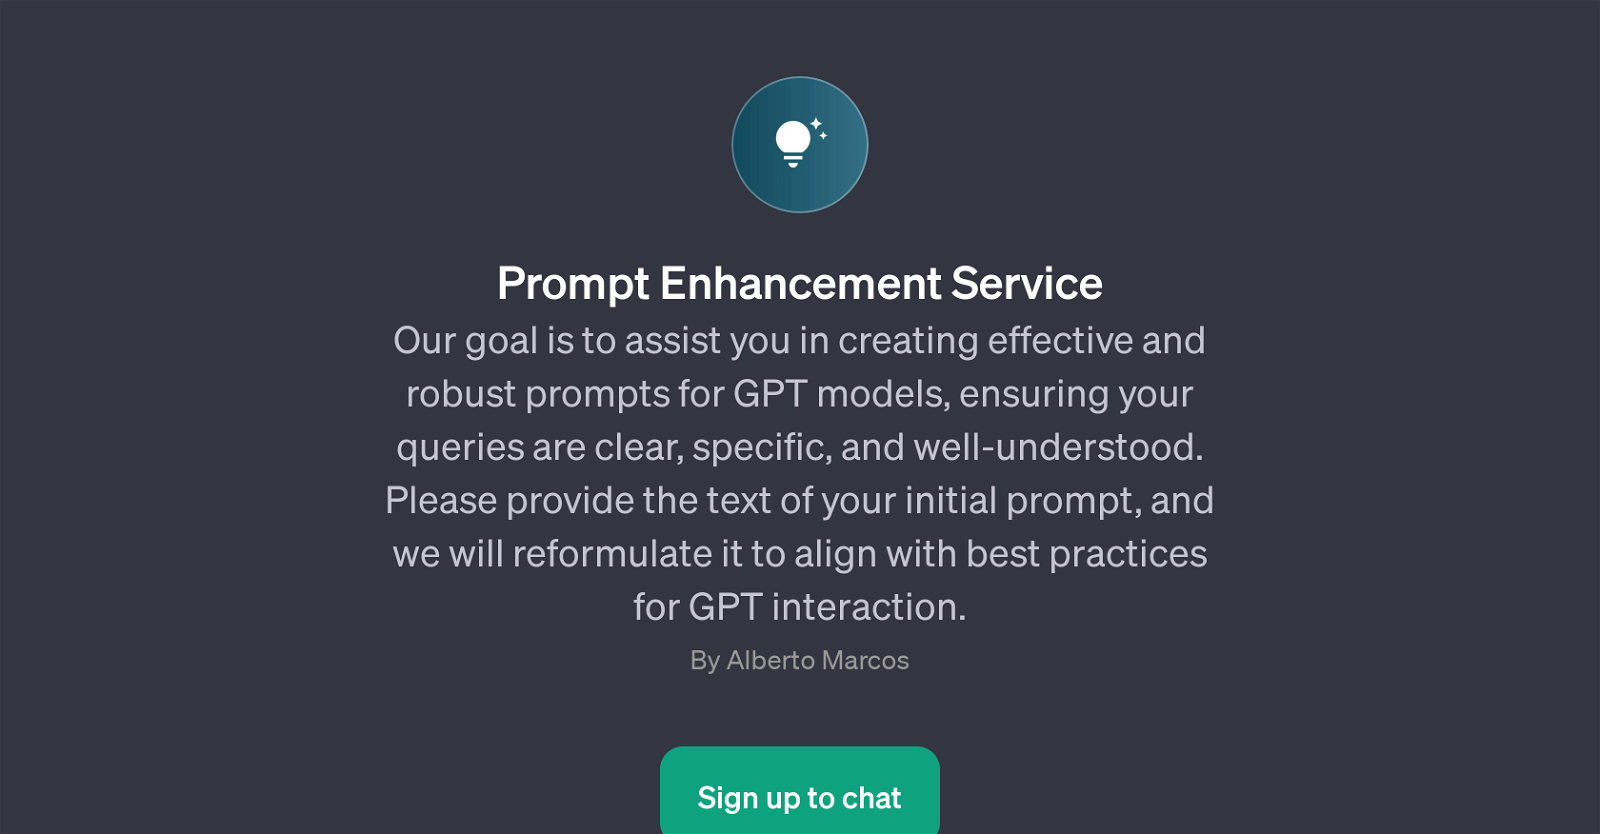 Prompt Enhancement Service website